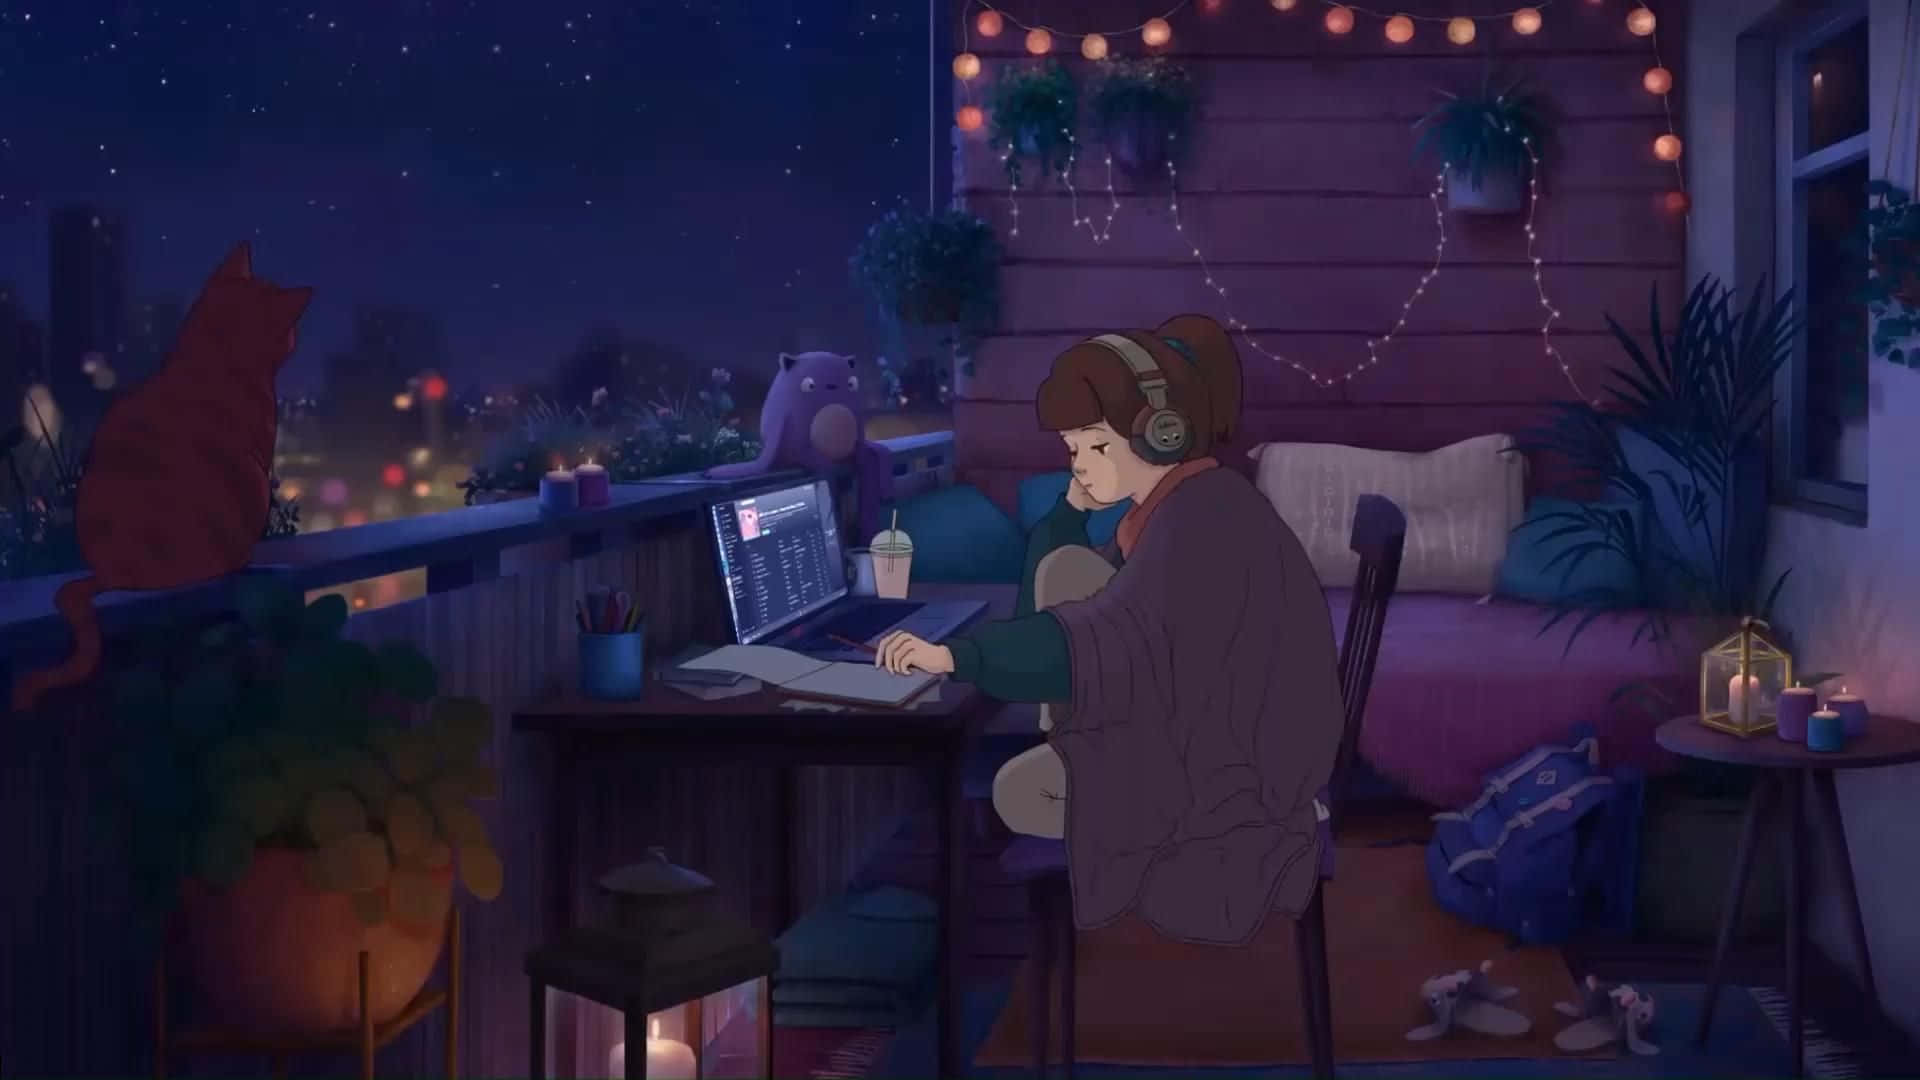 Anime Lo-Fi Girl Studying Chill Vibe 4K wallpaper